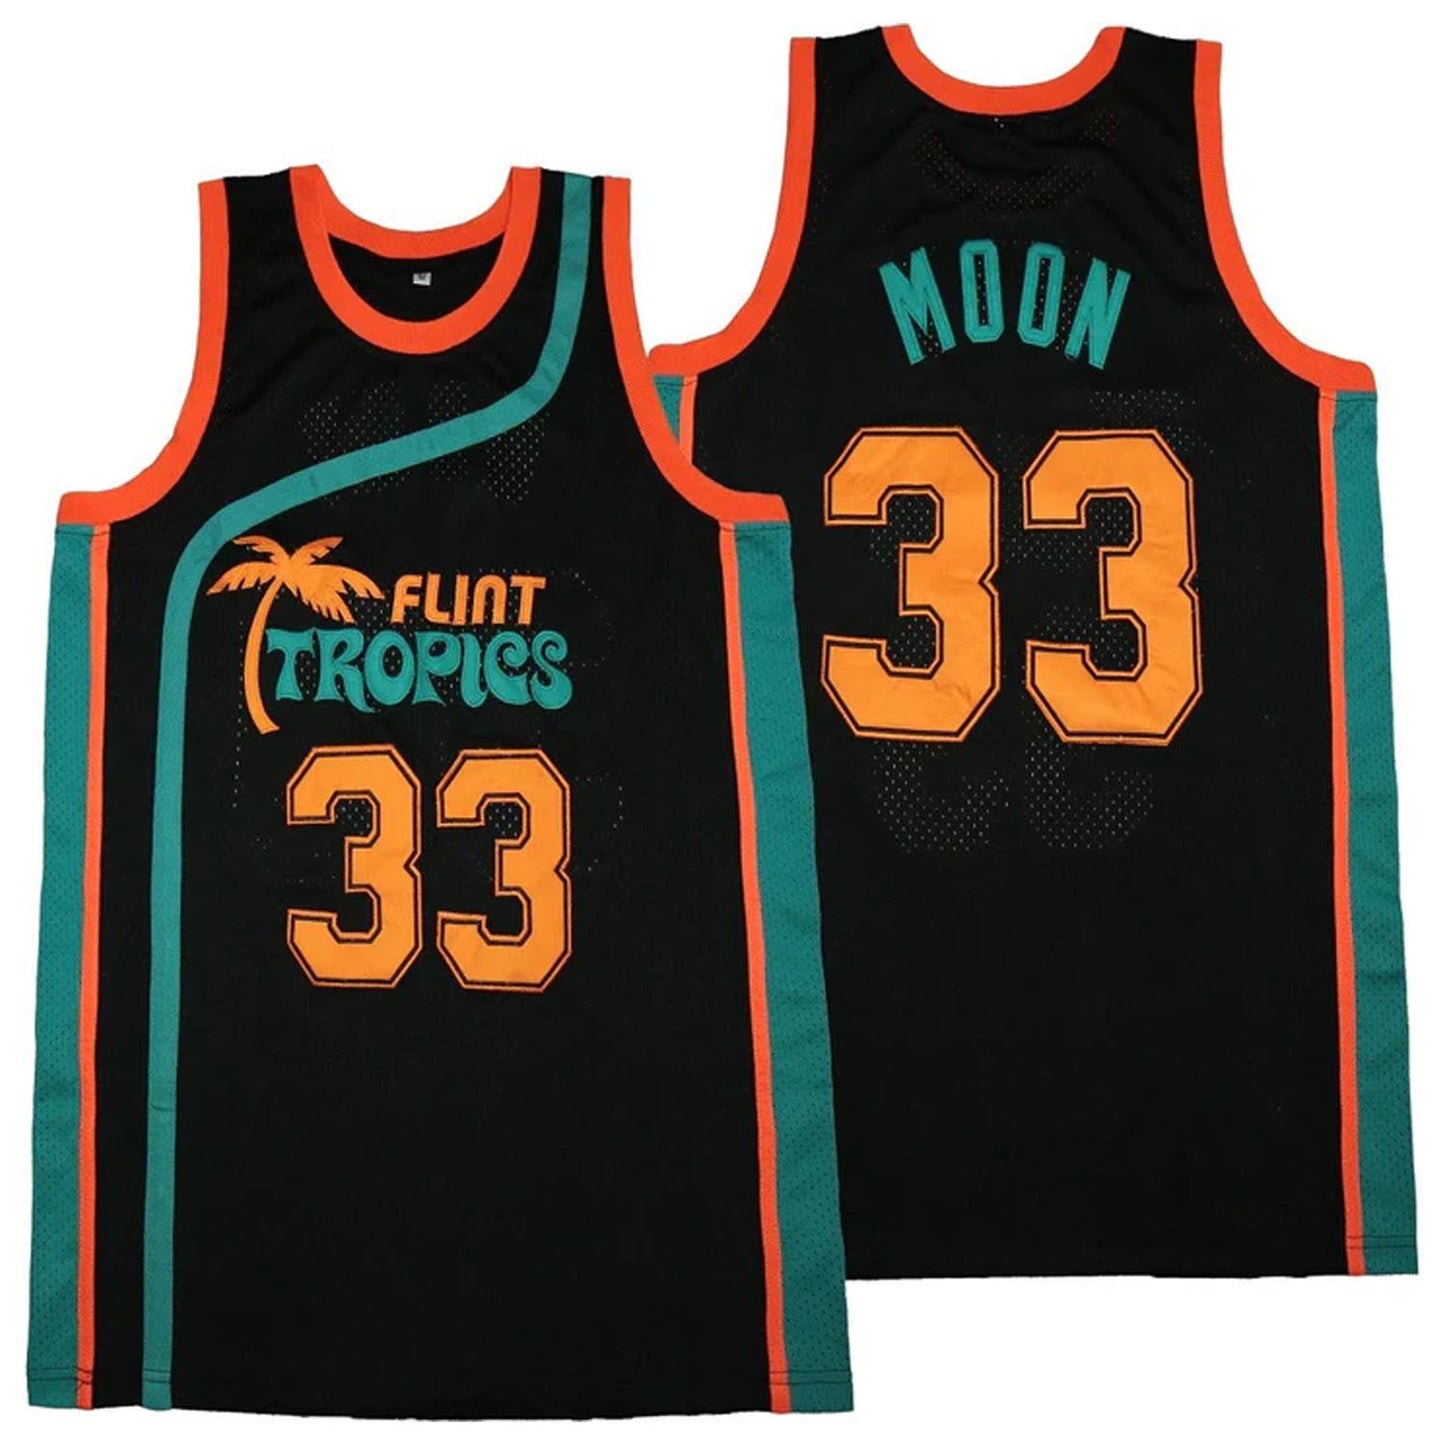 Jackie Moon Flint Tropics 33 Jersey